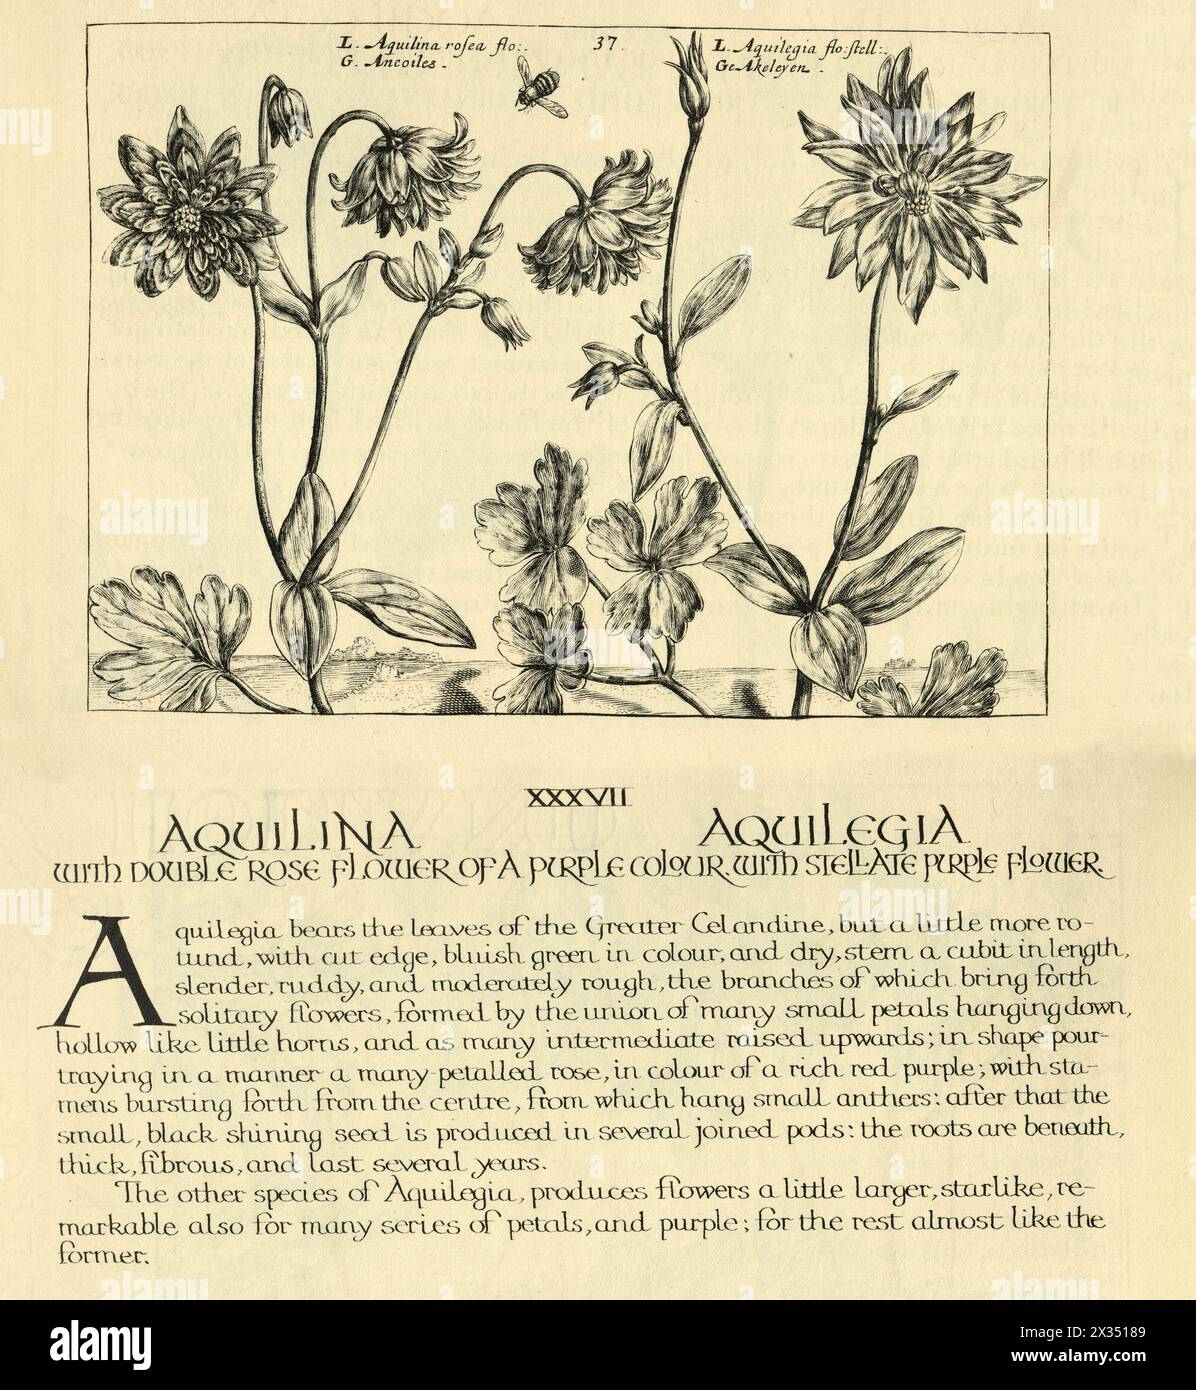 Botanical art print of Aquilegia, columbine, perennial flowering plant, from Hortus Floridus by Crispin de Passe, Vintage illustration, 17th Century Stock Photo